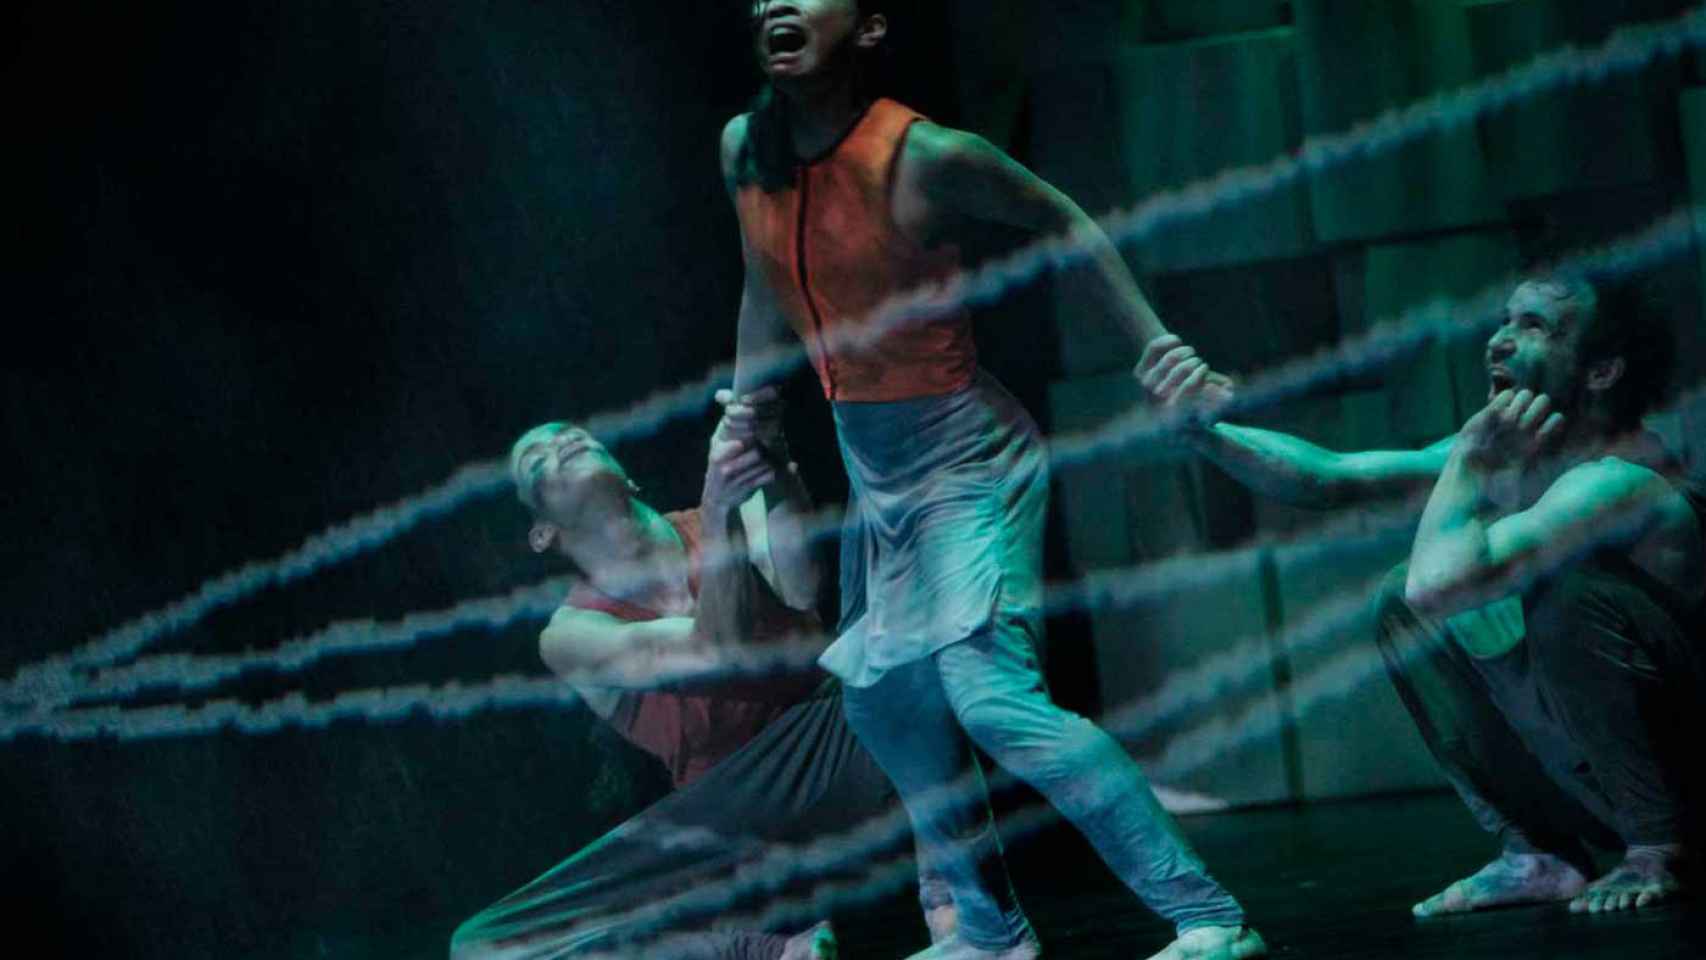 Una escena del ballet 'El libro de la selva', en el Liceu / LICEU